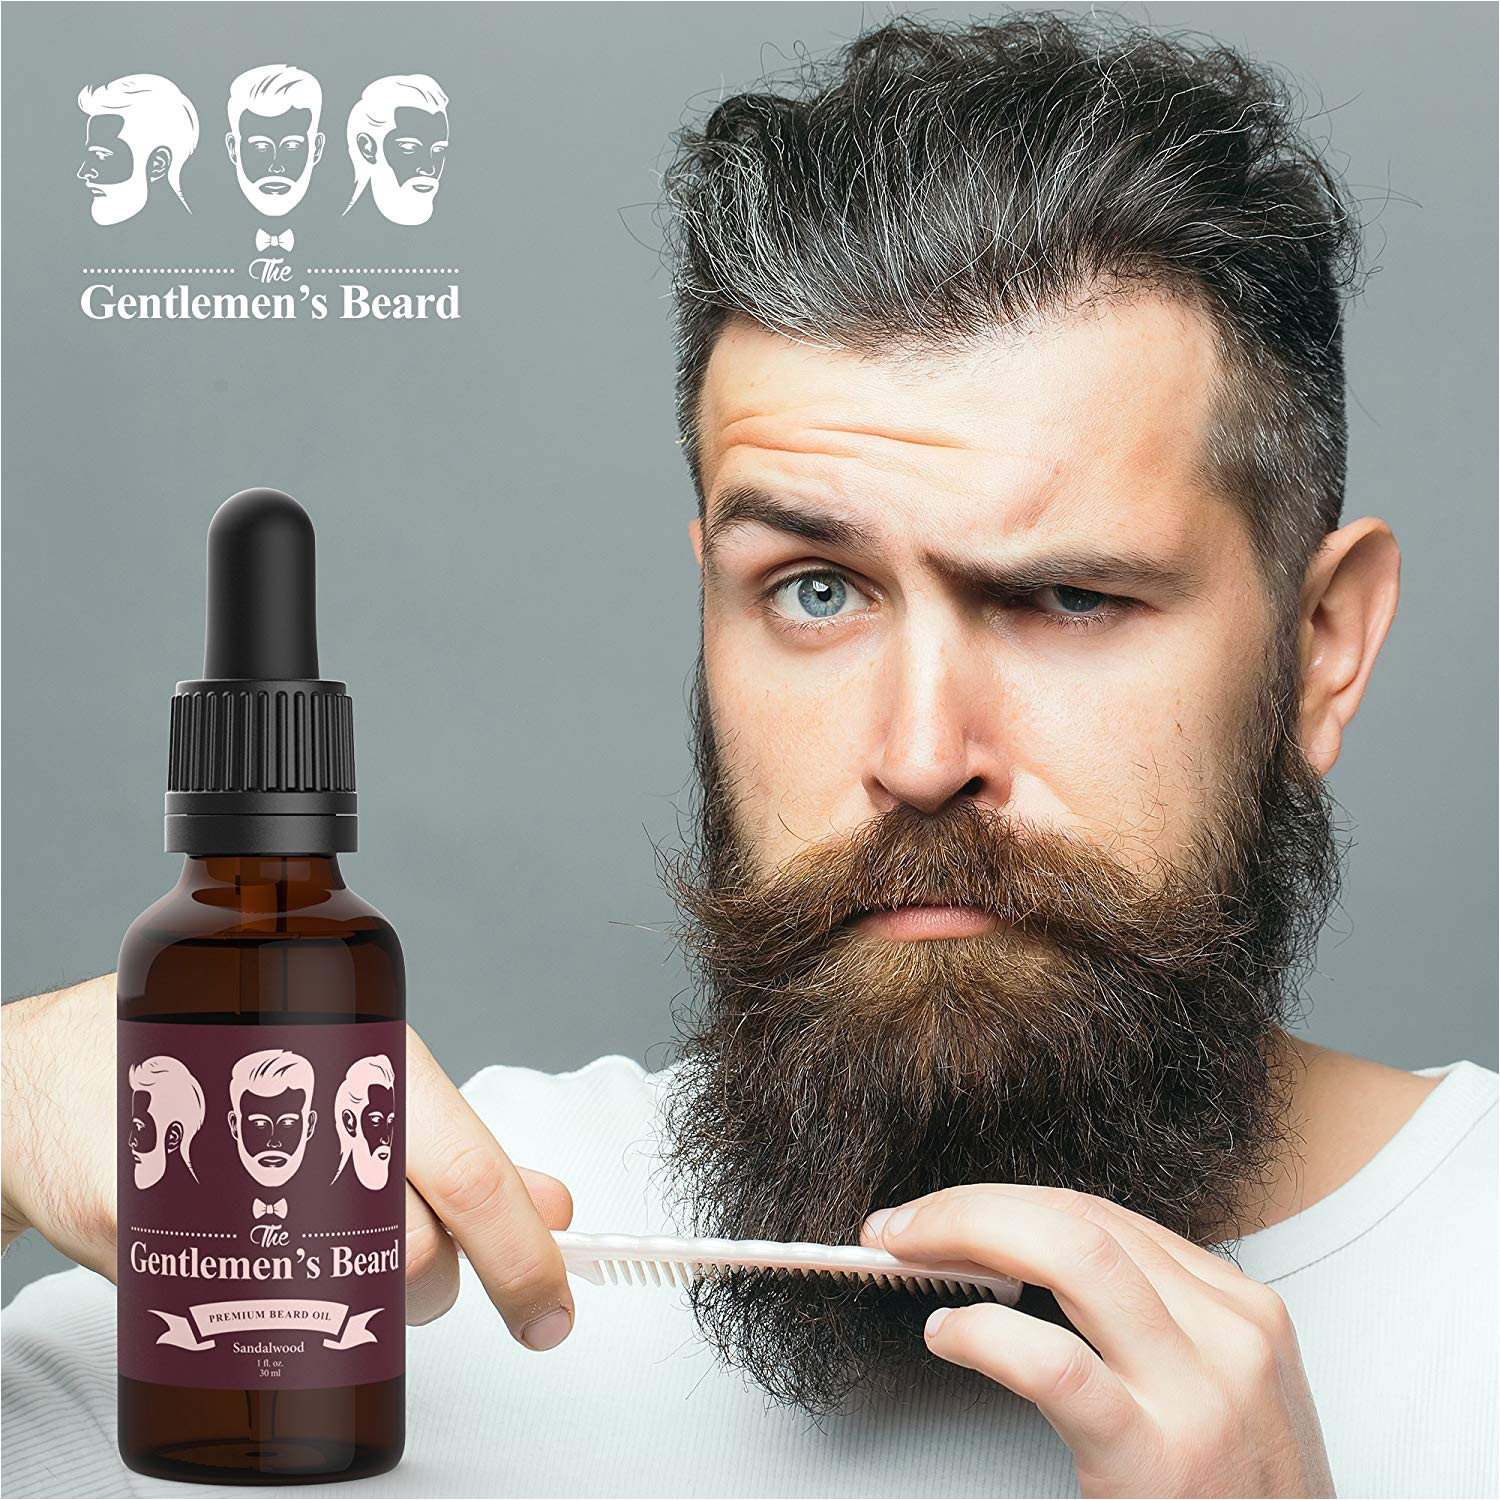 amazon com the gentlemen s beard premium beard oil leave in conditioner softener sandalwood health personal care